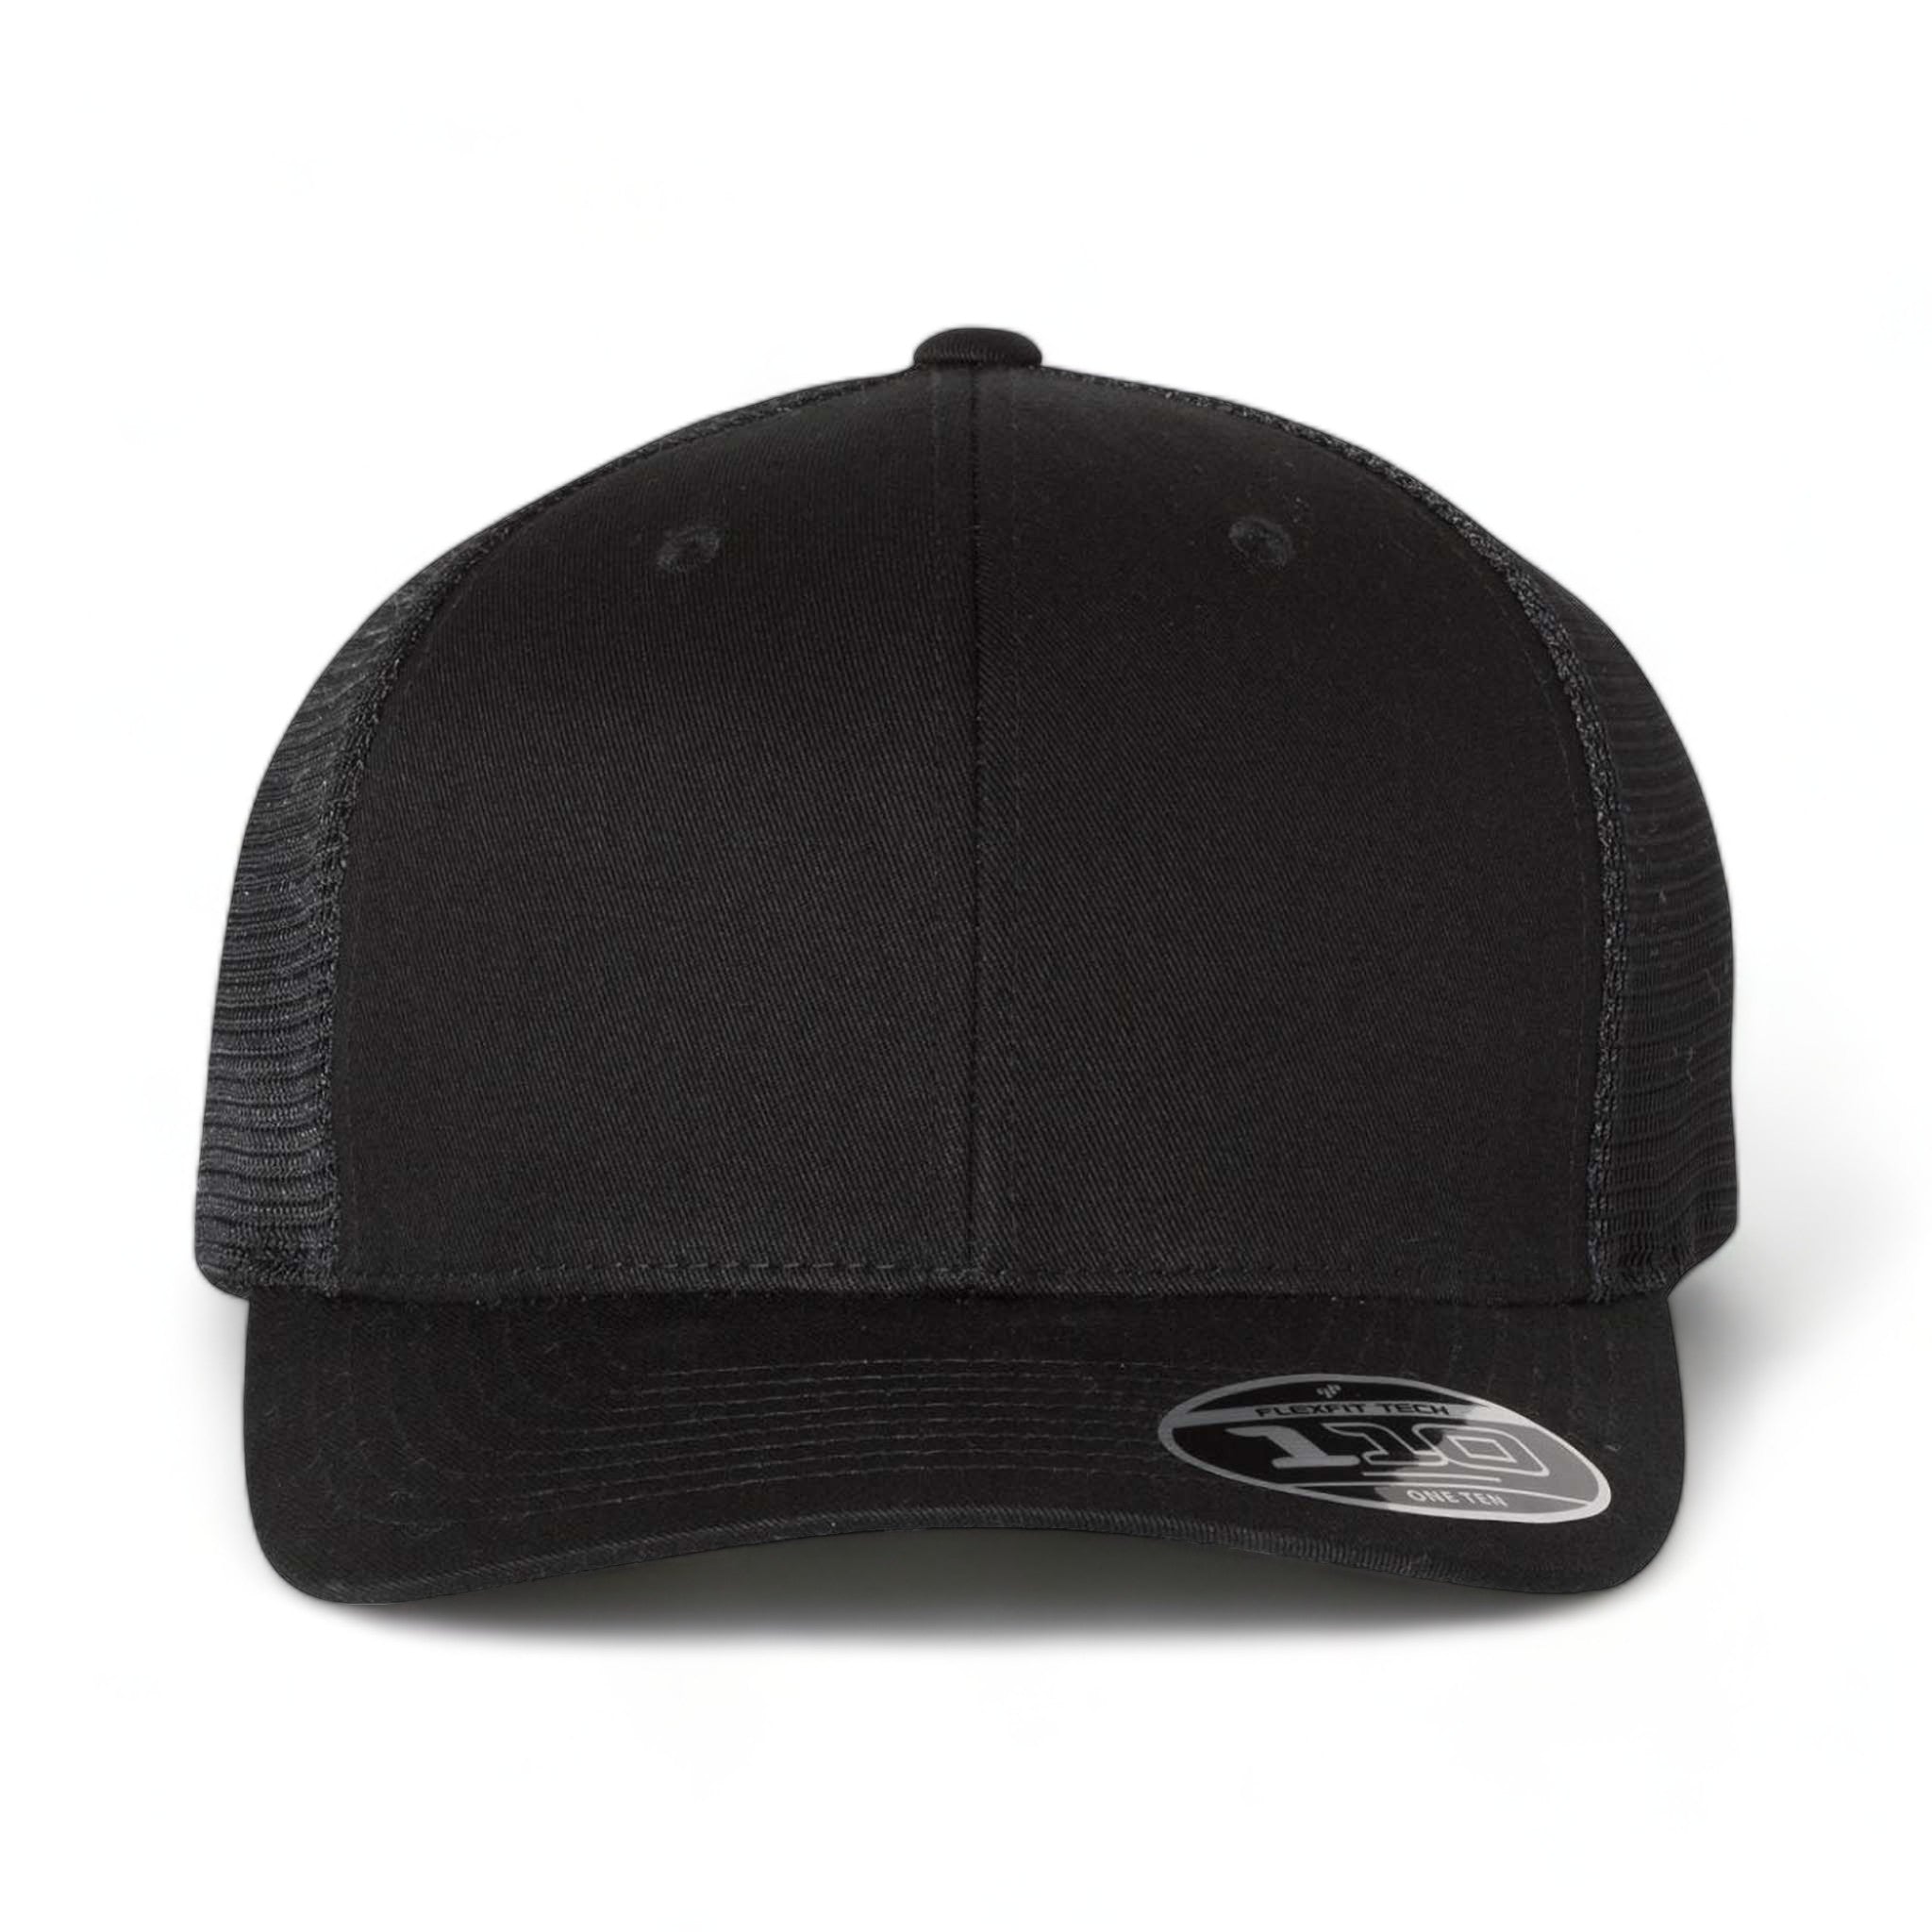 Front view of Flexfit 110M custom hat in black